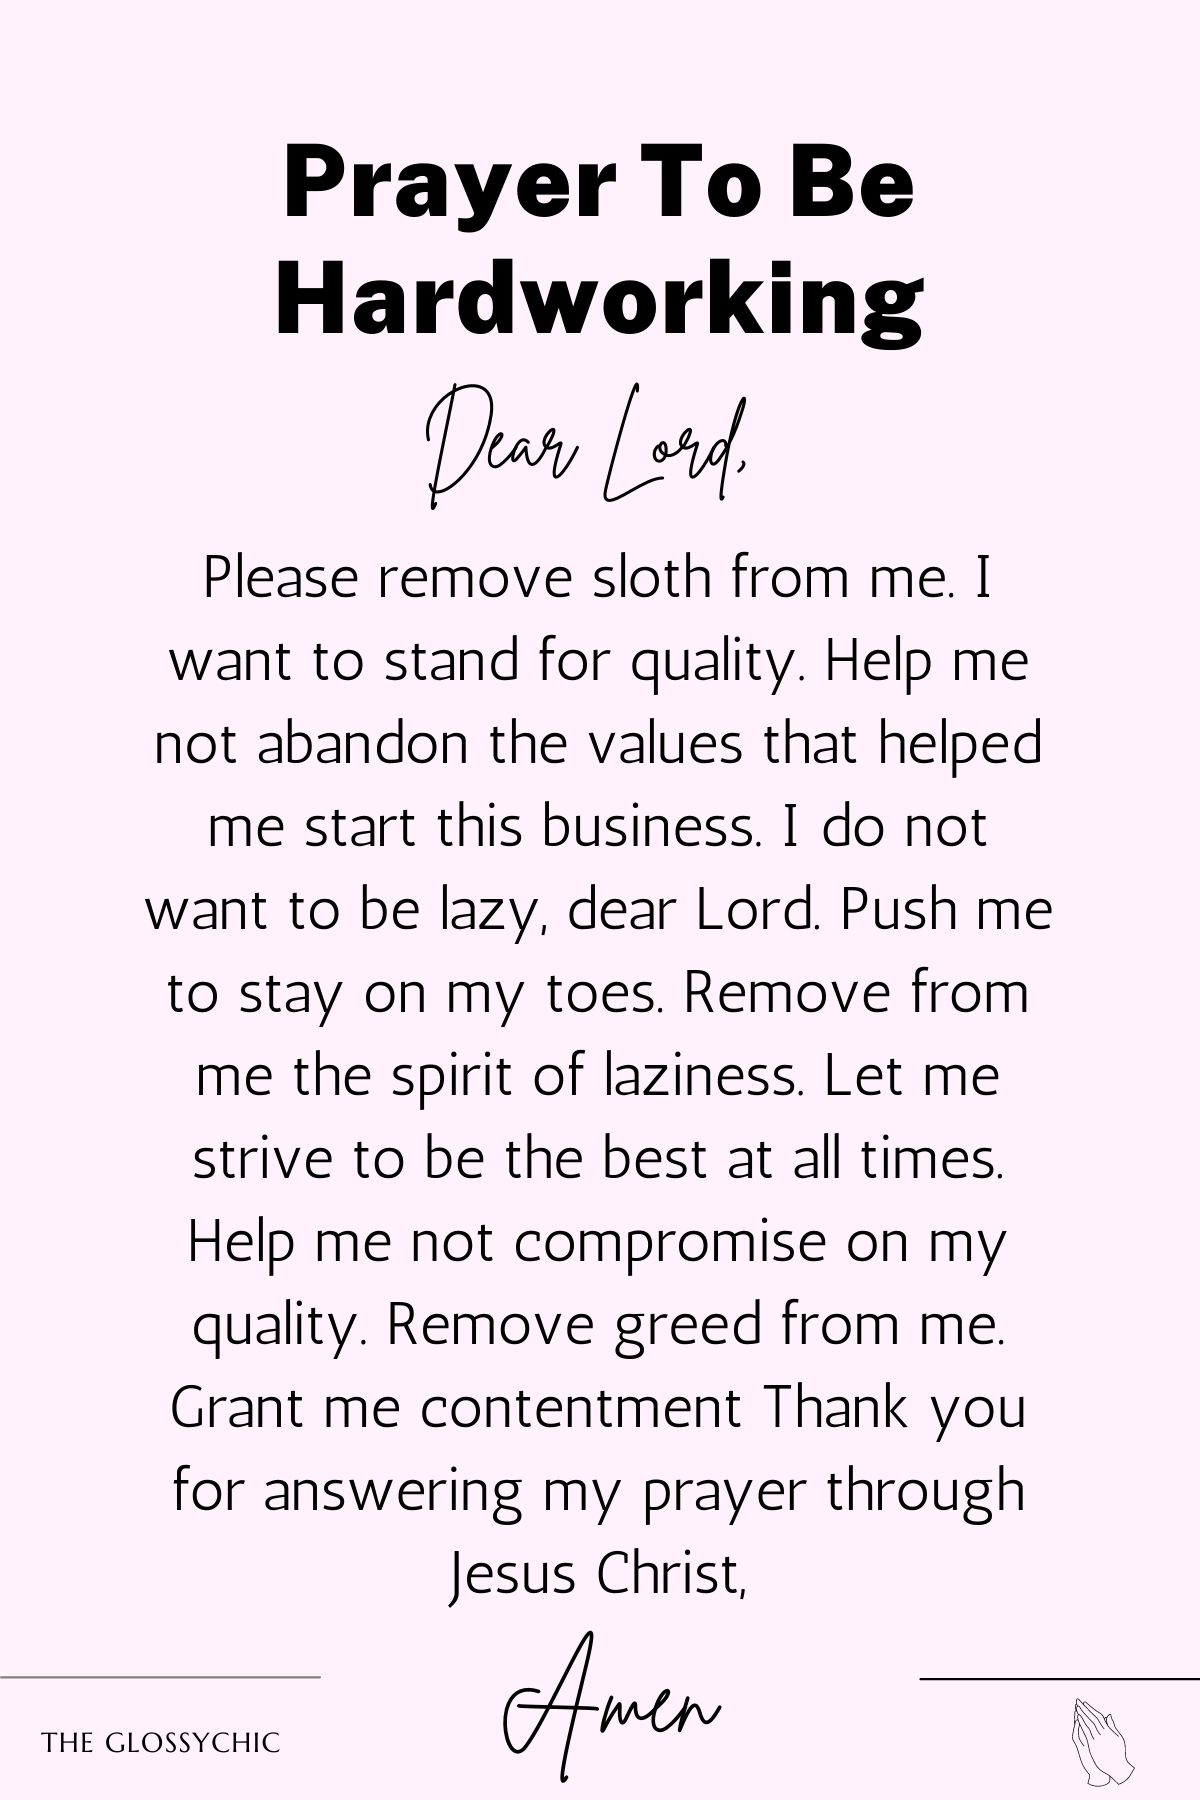 Prayer to be hardworking